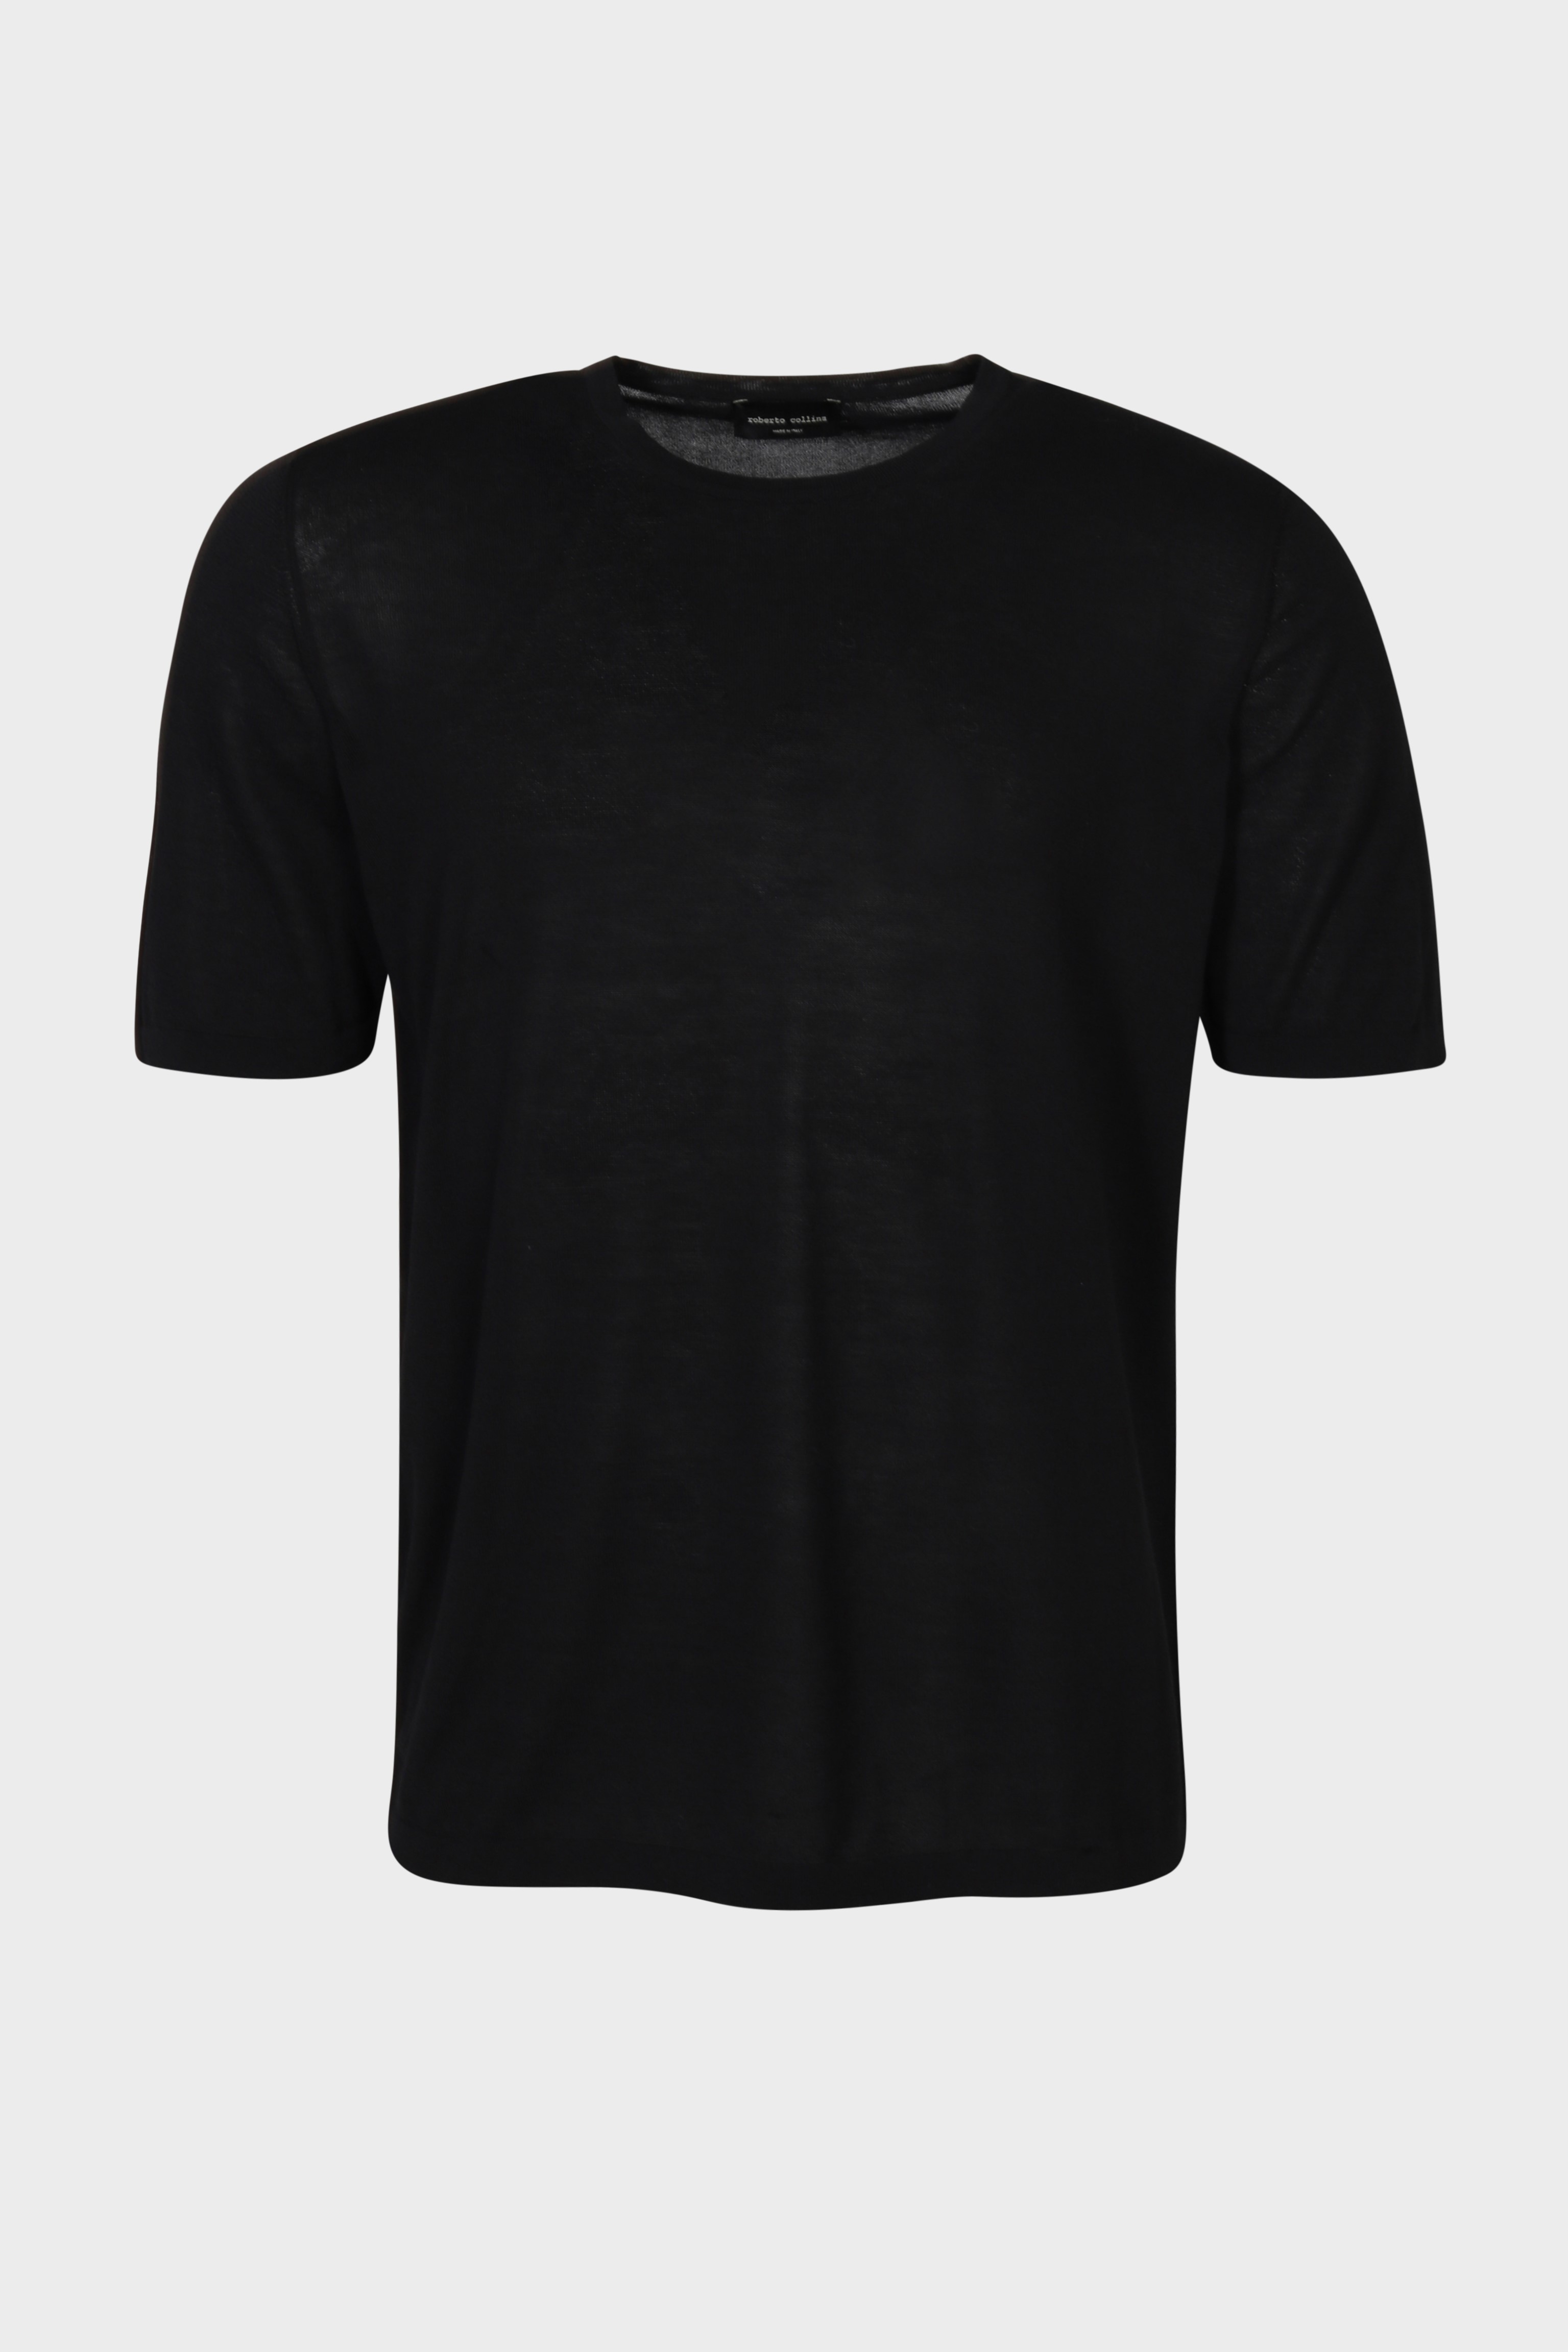 ROBERTO COLLINA Cotton Knit T-Shirt in Black 50